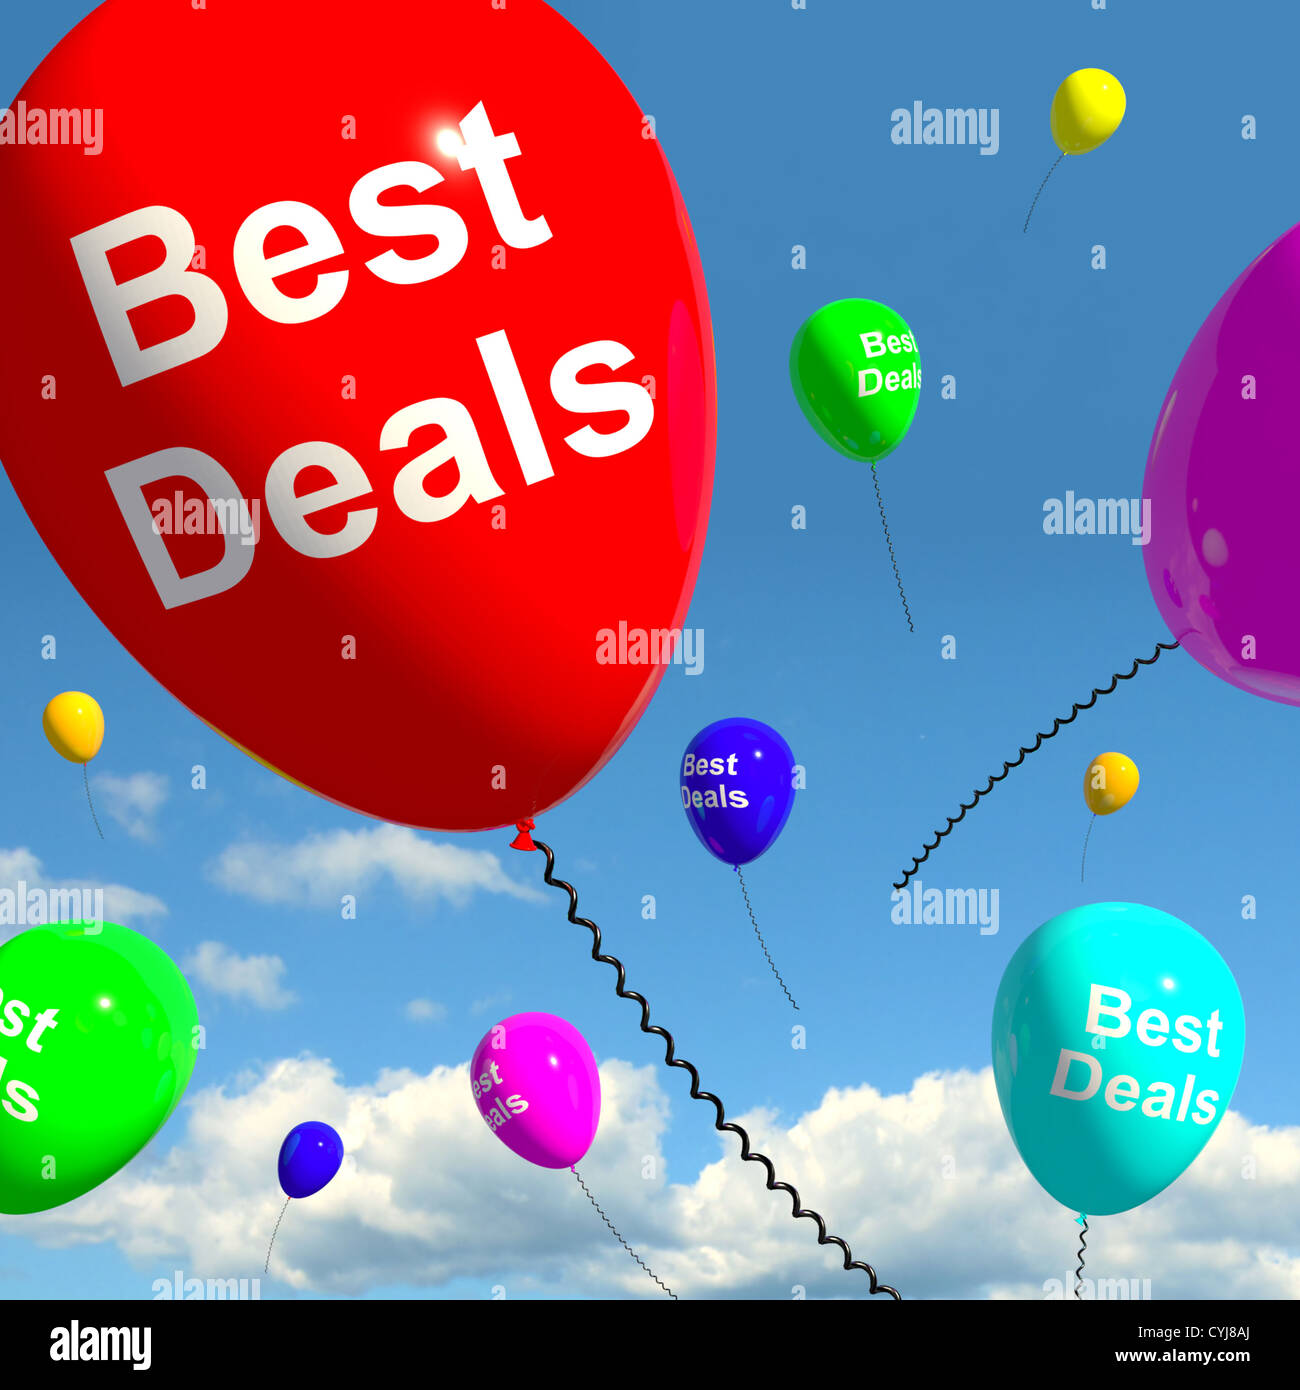 Mejores ofertas globos representa ofertas o descuentos Foto de stock